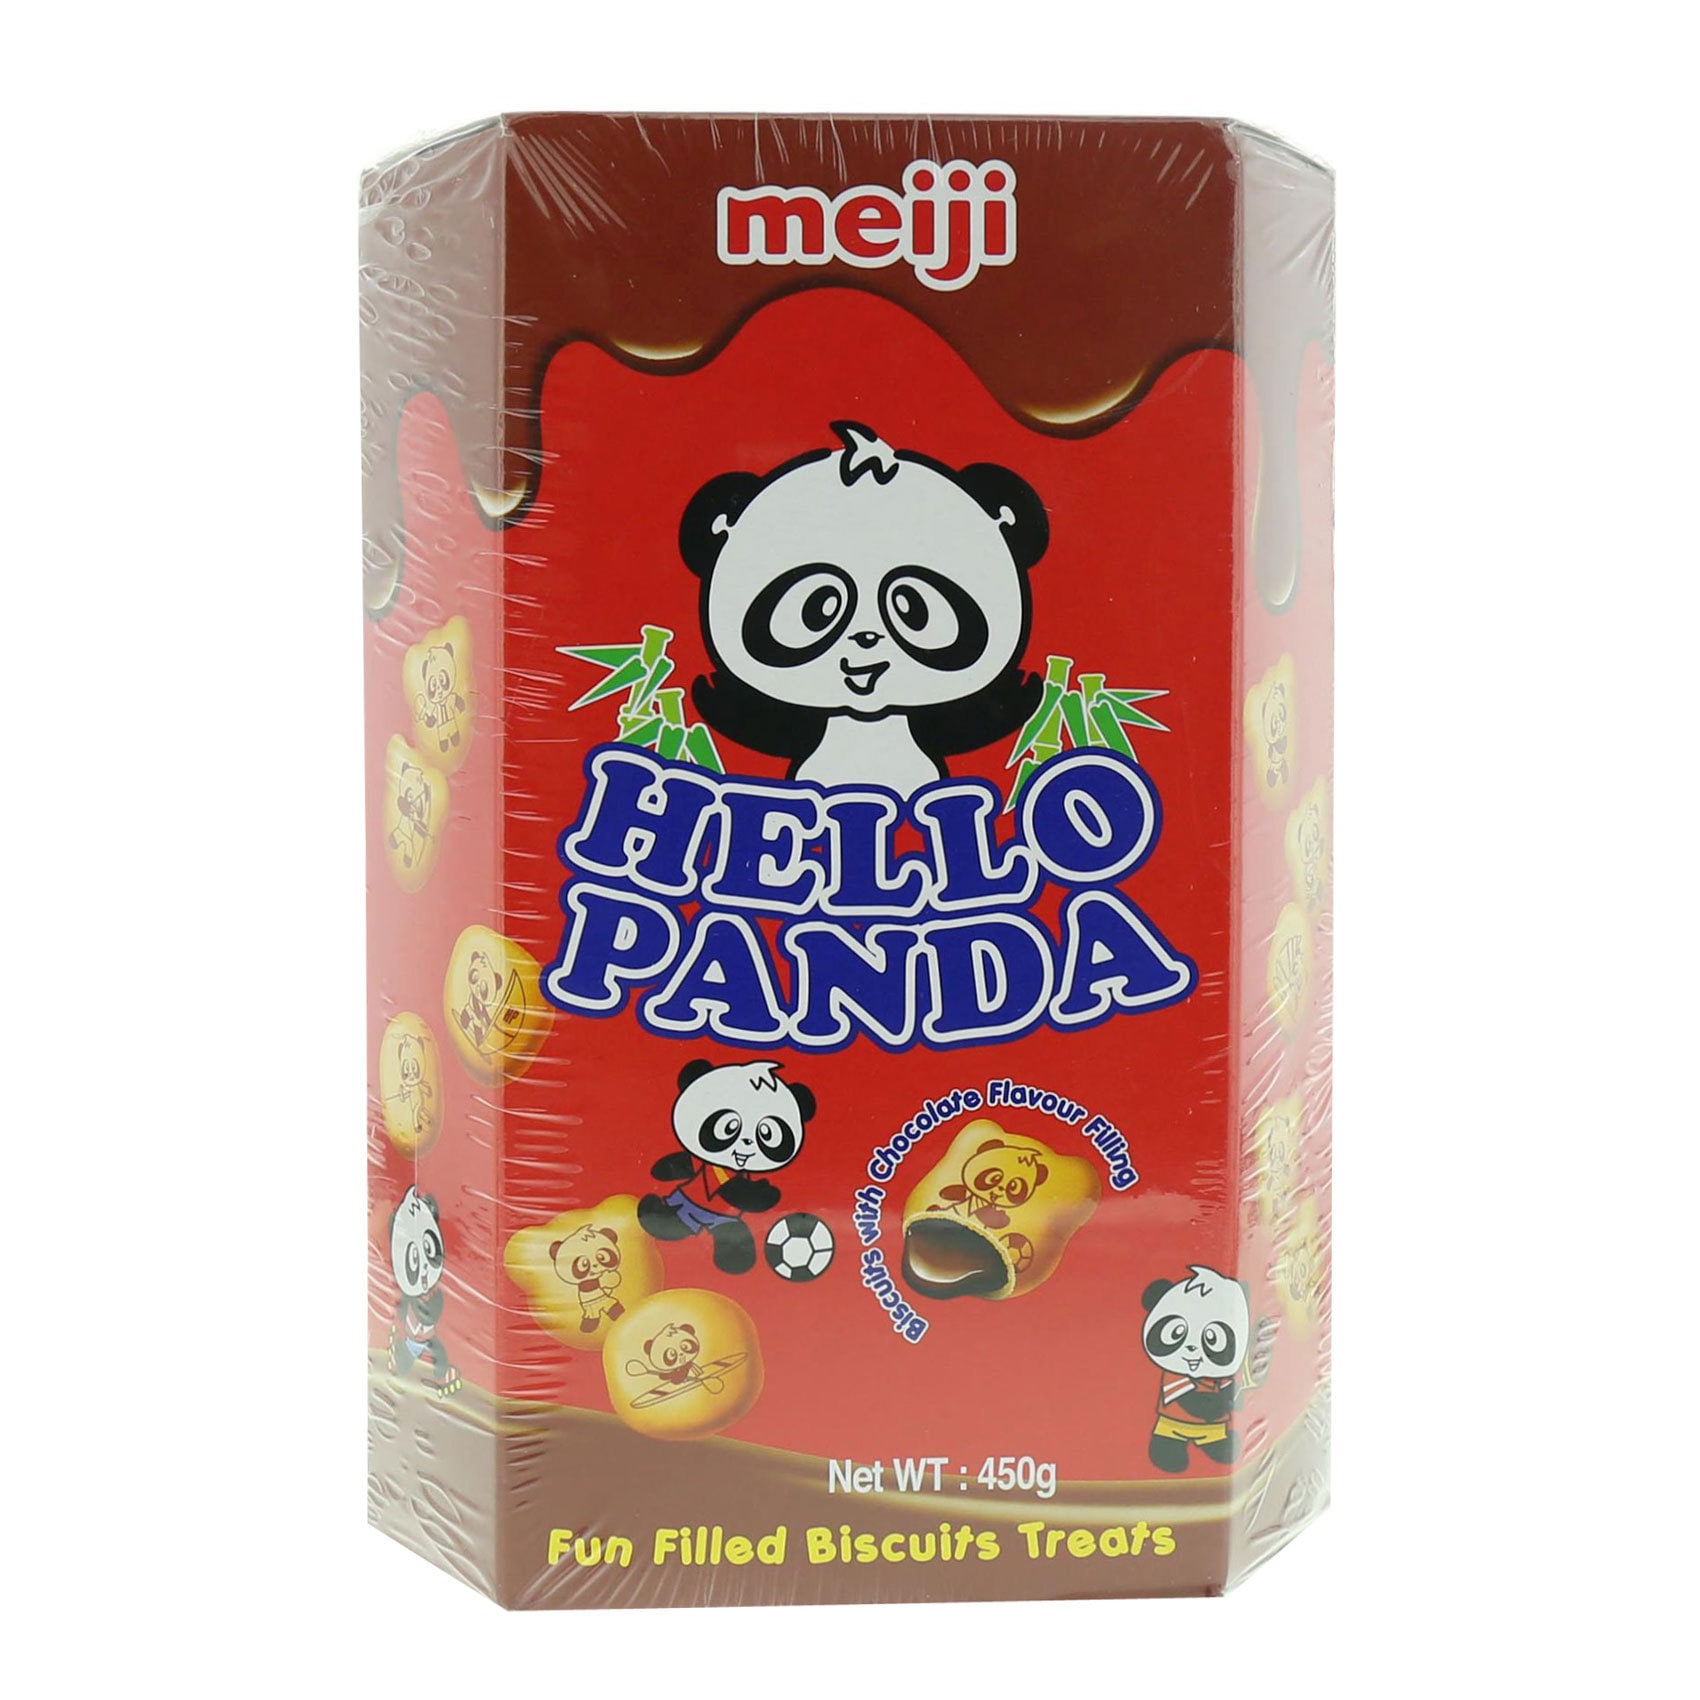 Meiji Hello Panda Fun Filled Biscuits Treats 450g